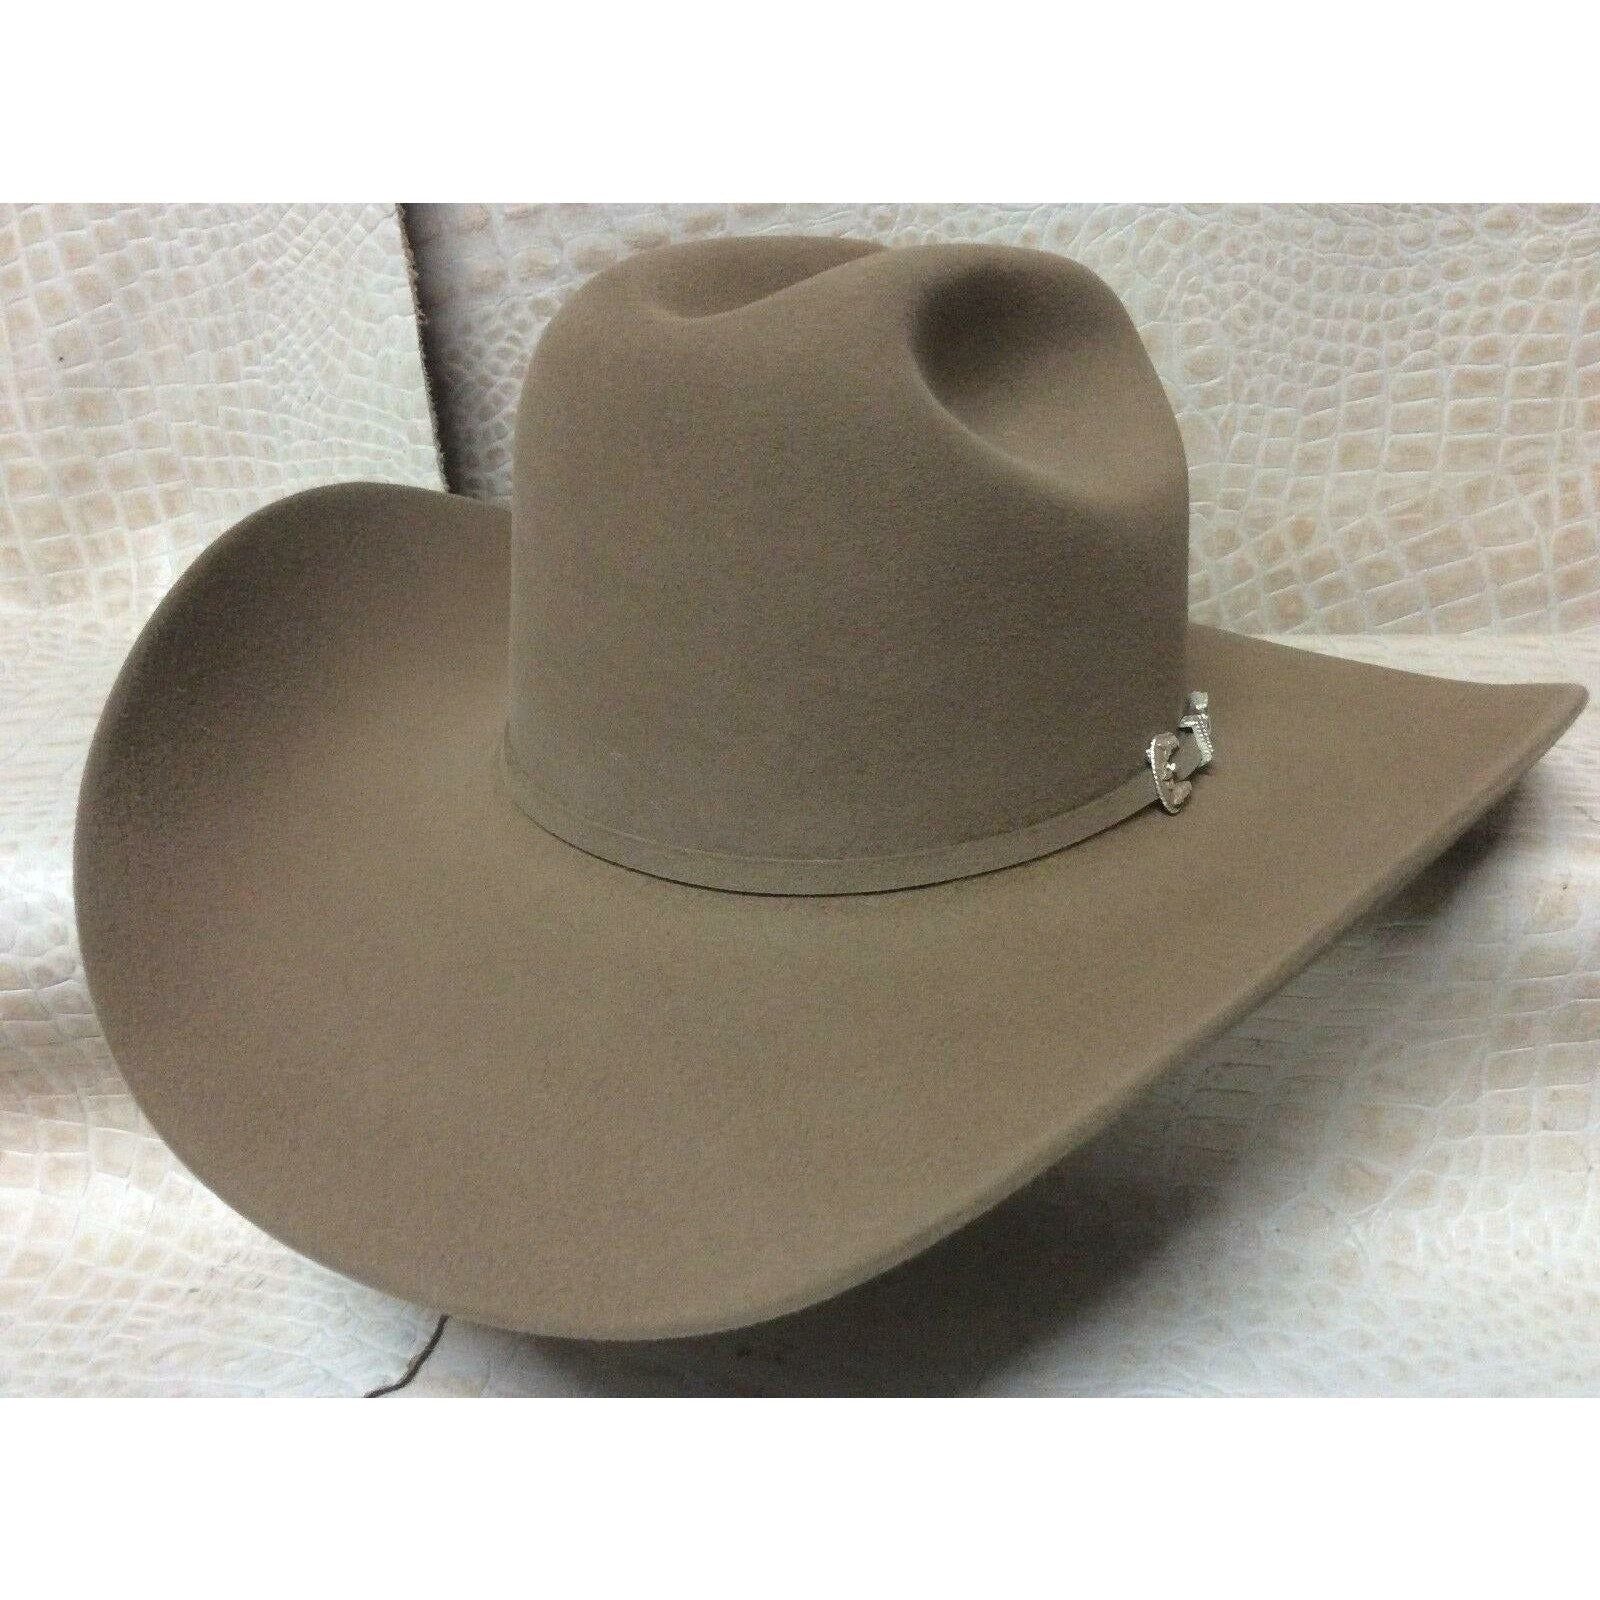 New Stetson Skyline Sahara 6X Beaver Fur Felt Western Rodeo Riding Cowboy Hat - CWesternwear